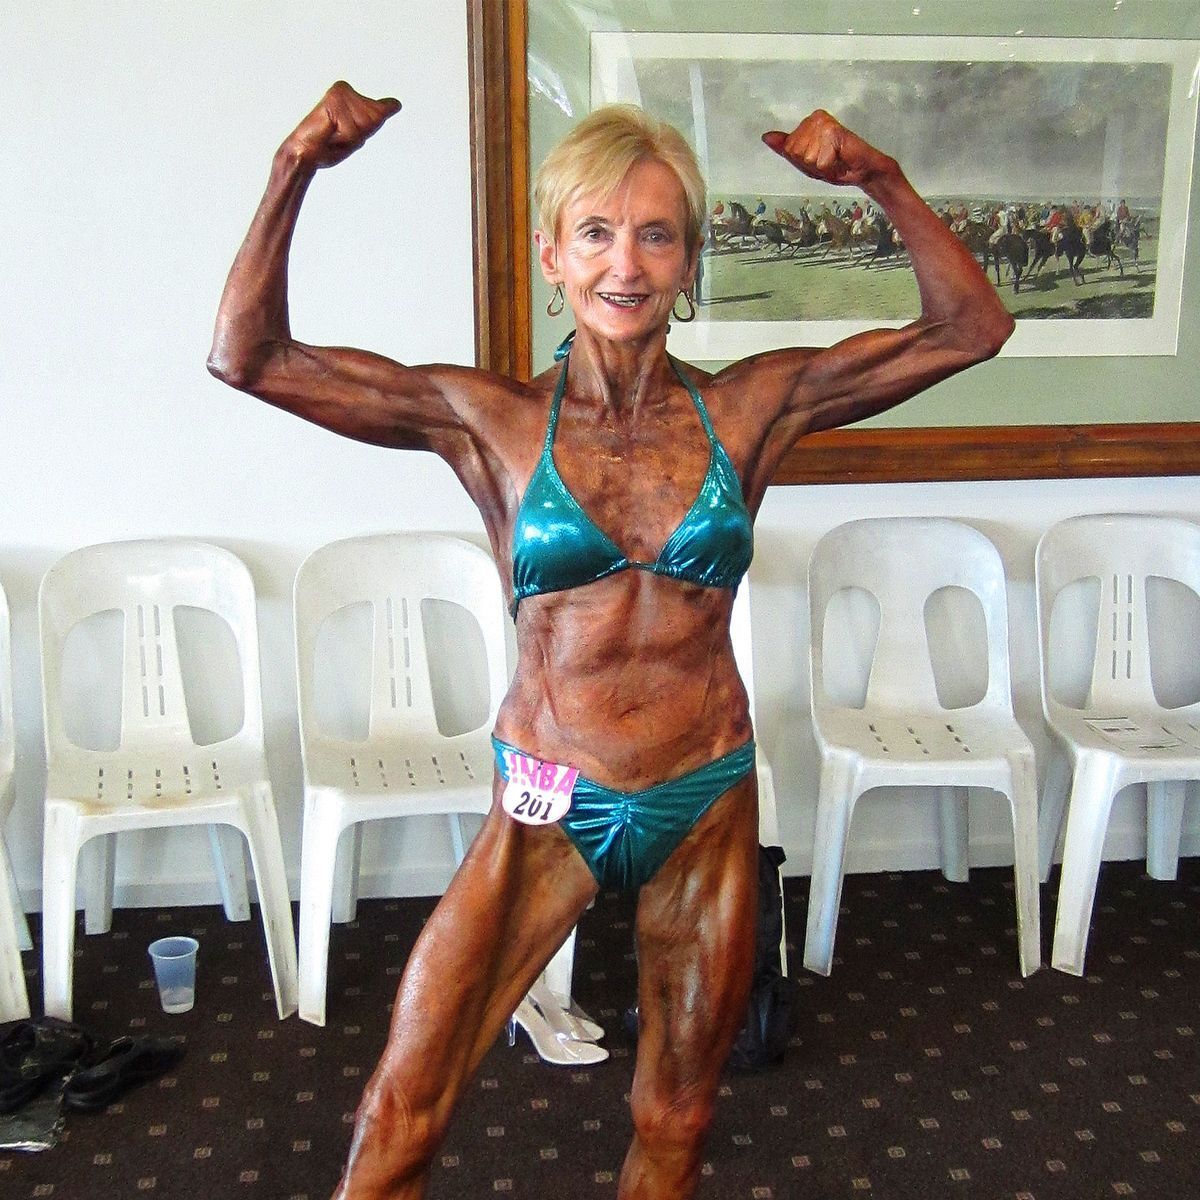 Janice Lorraine is a bodybuilder